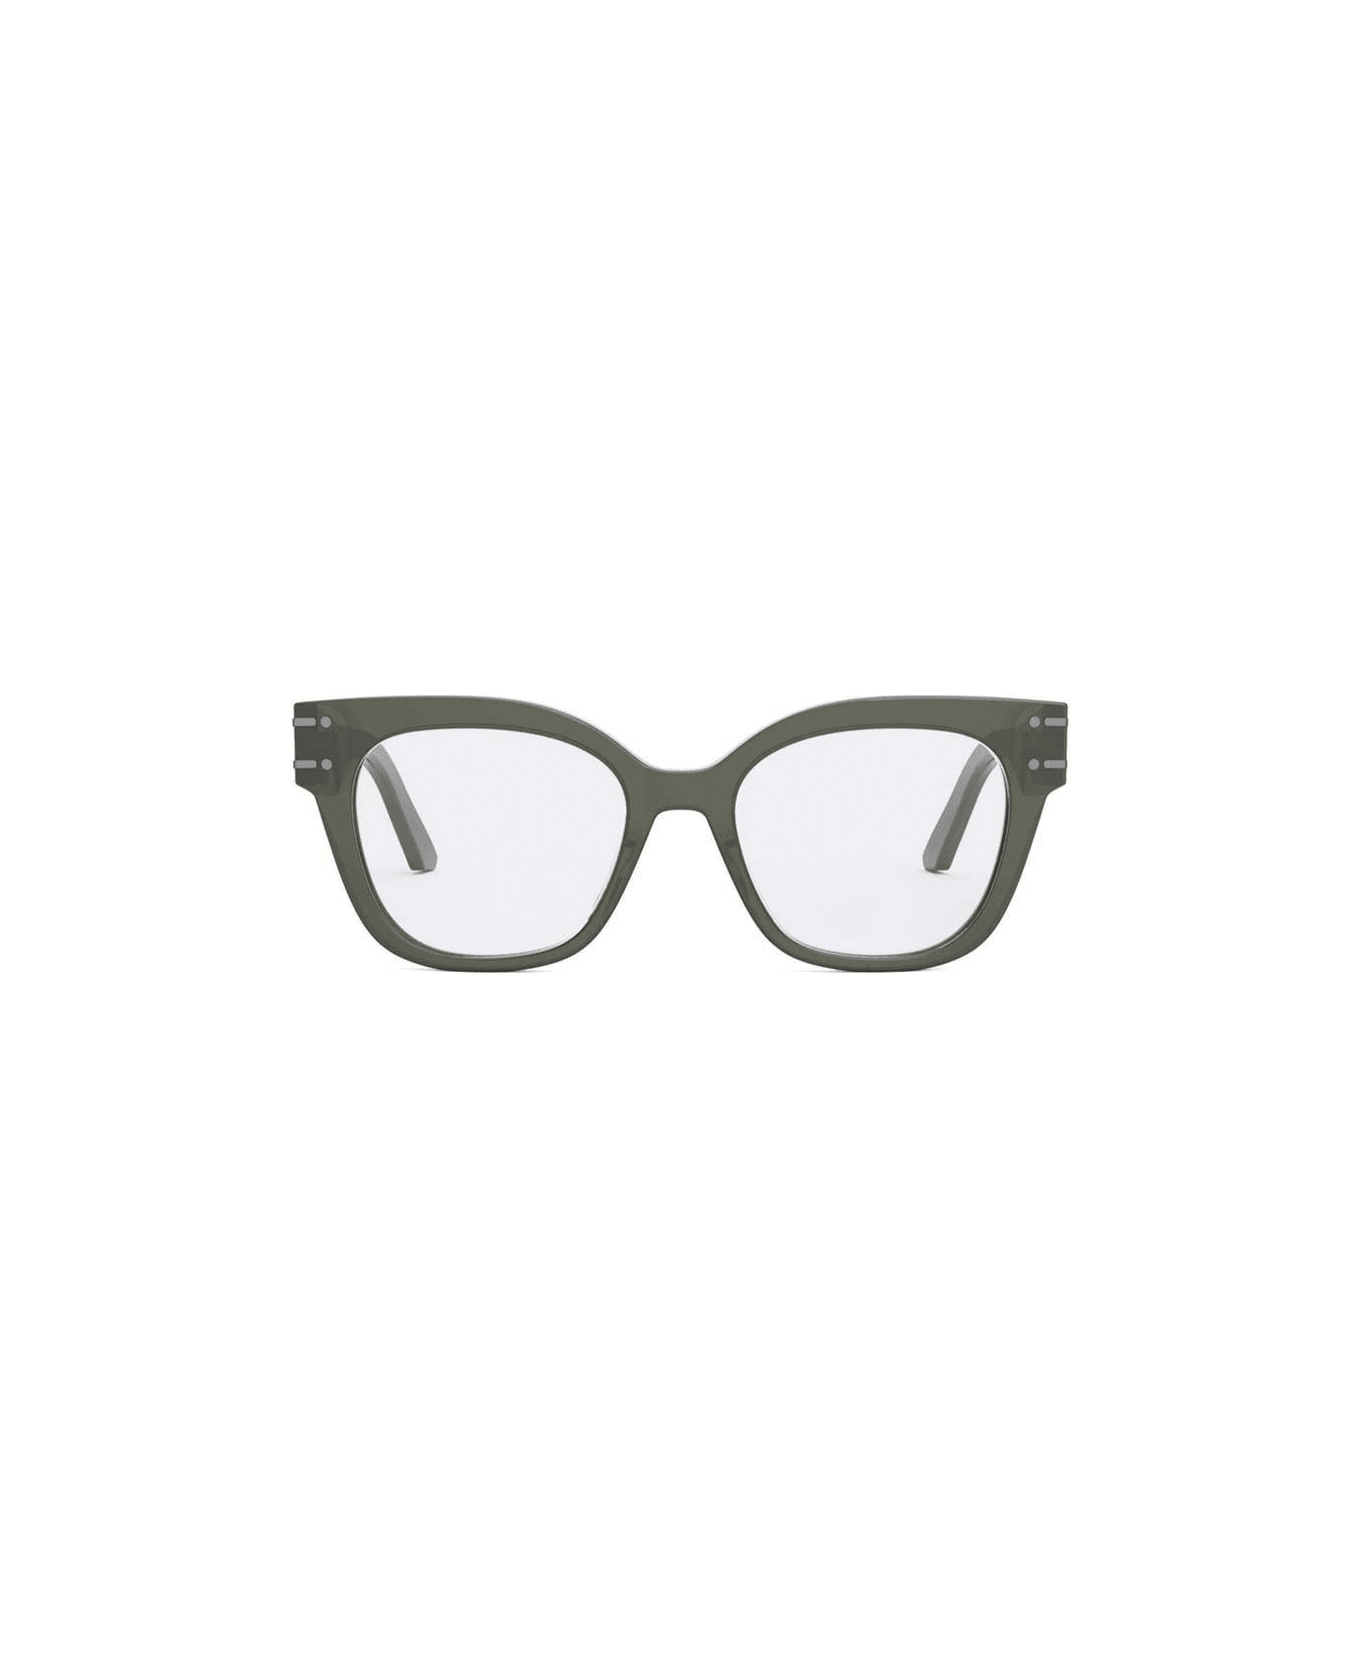 Dior Eyewear Round Frame Glasses - 5500